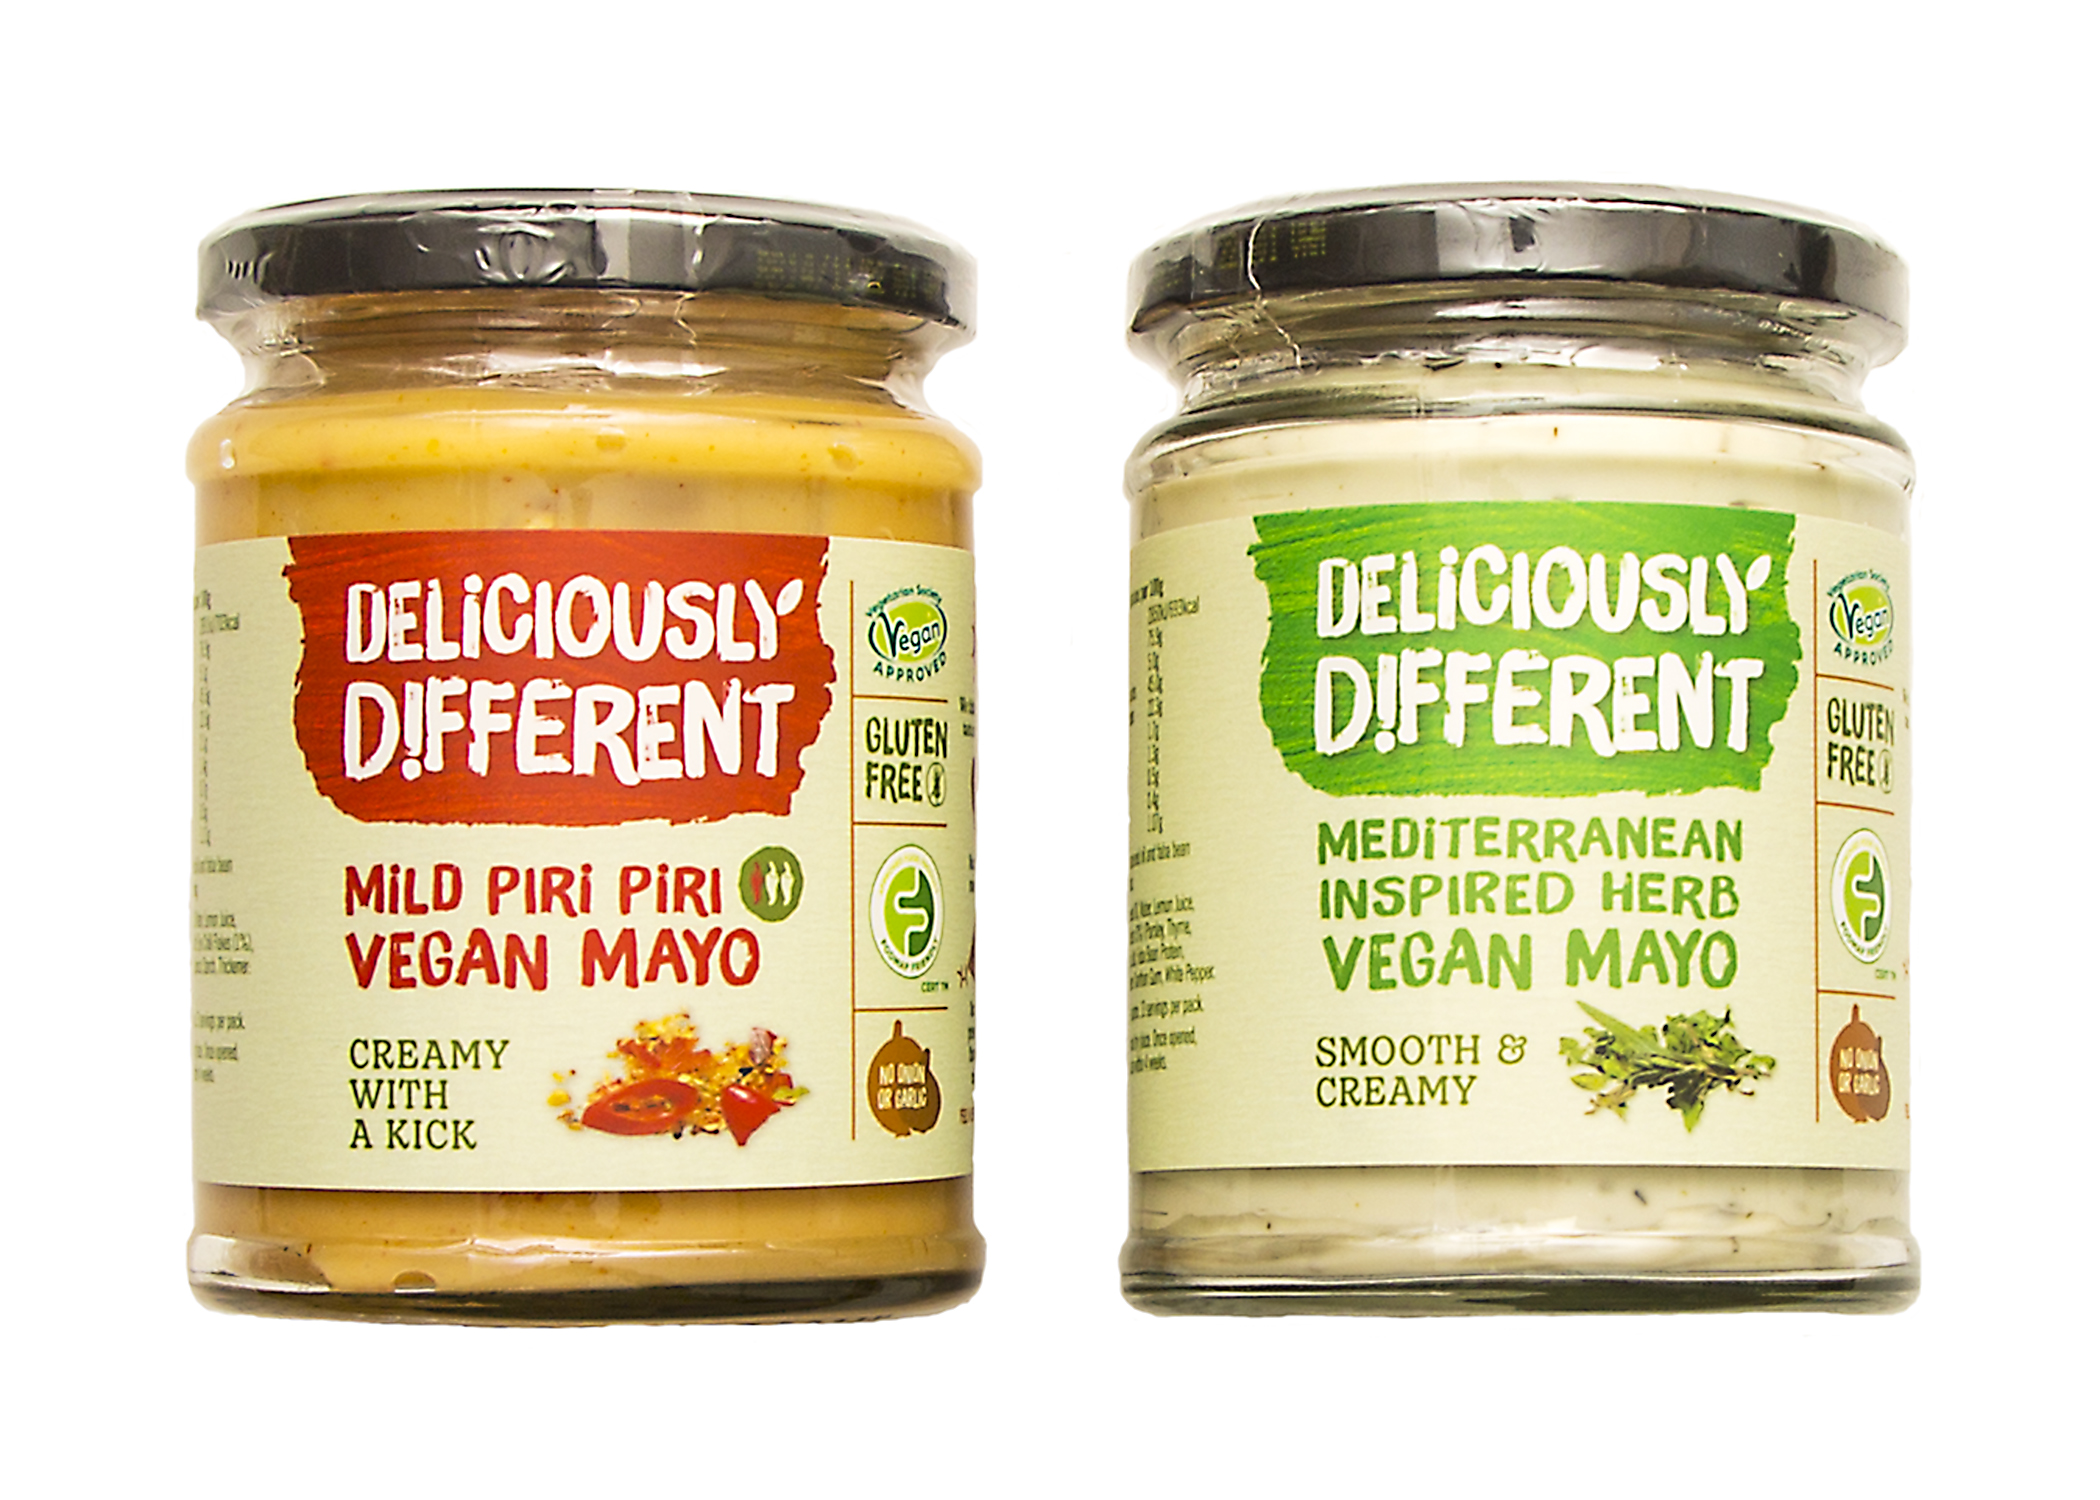 Deliciously Different Mediterranean Inspired Herb Vegan Mayo & Mild Piri Piri Vegan Mayo